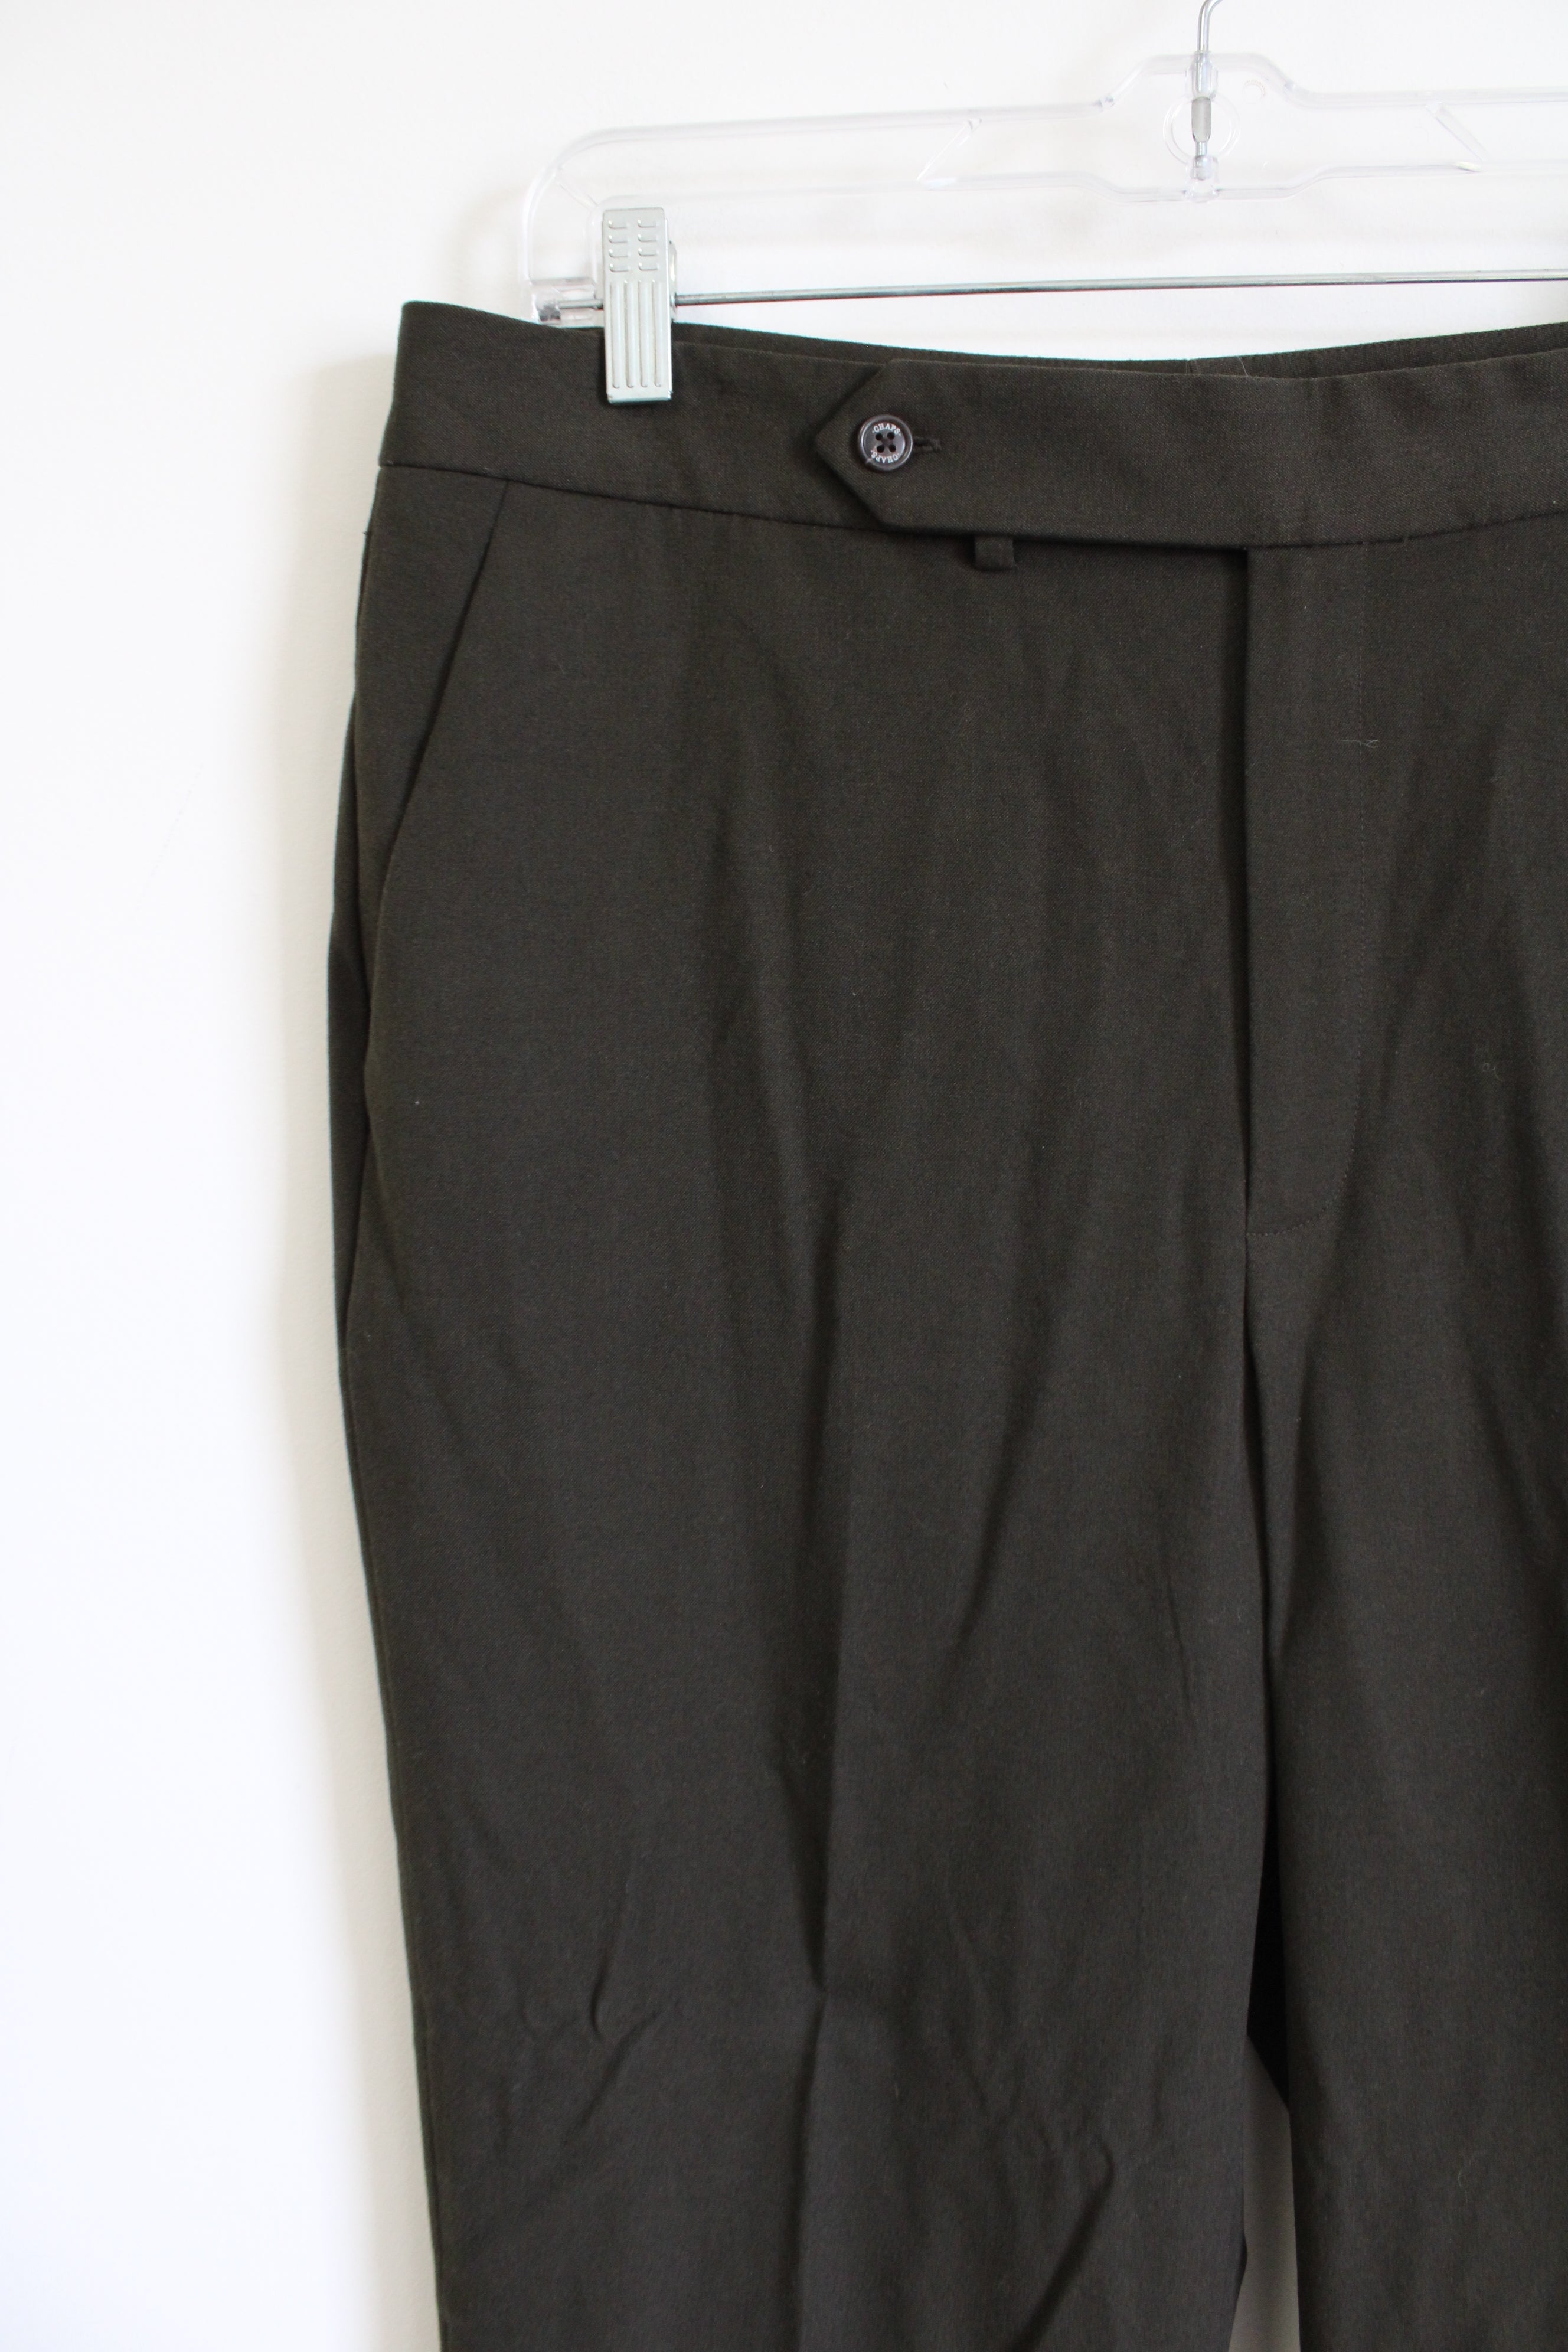 Chaps Dark Olive Green Trouser Pants | 12